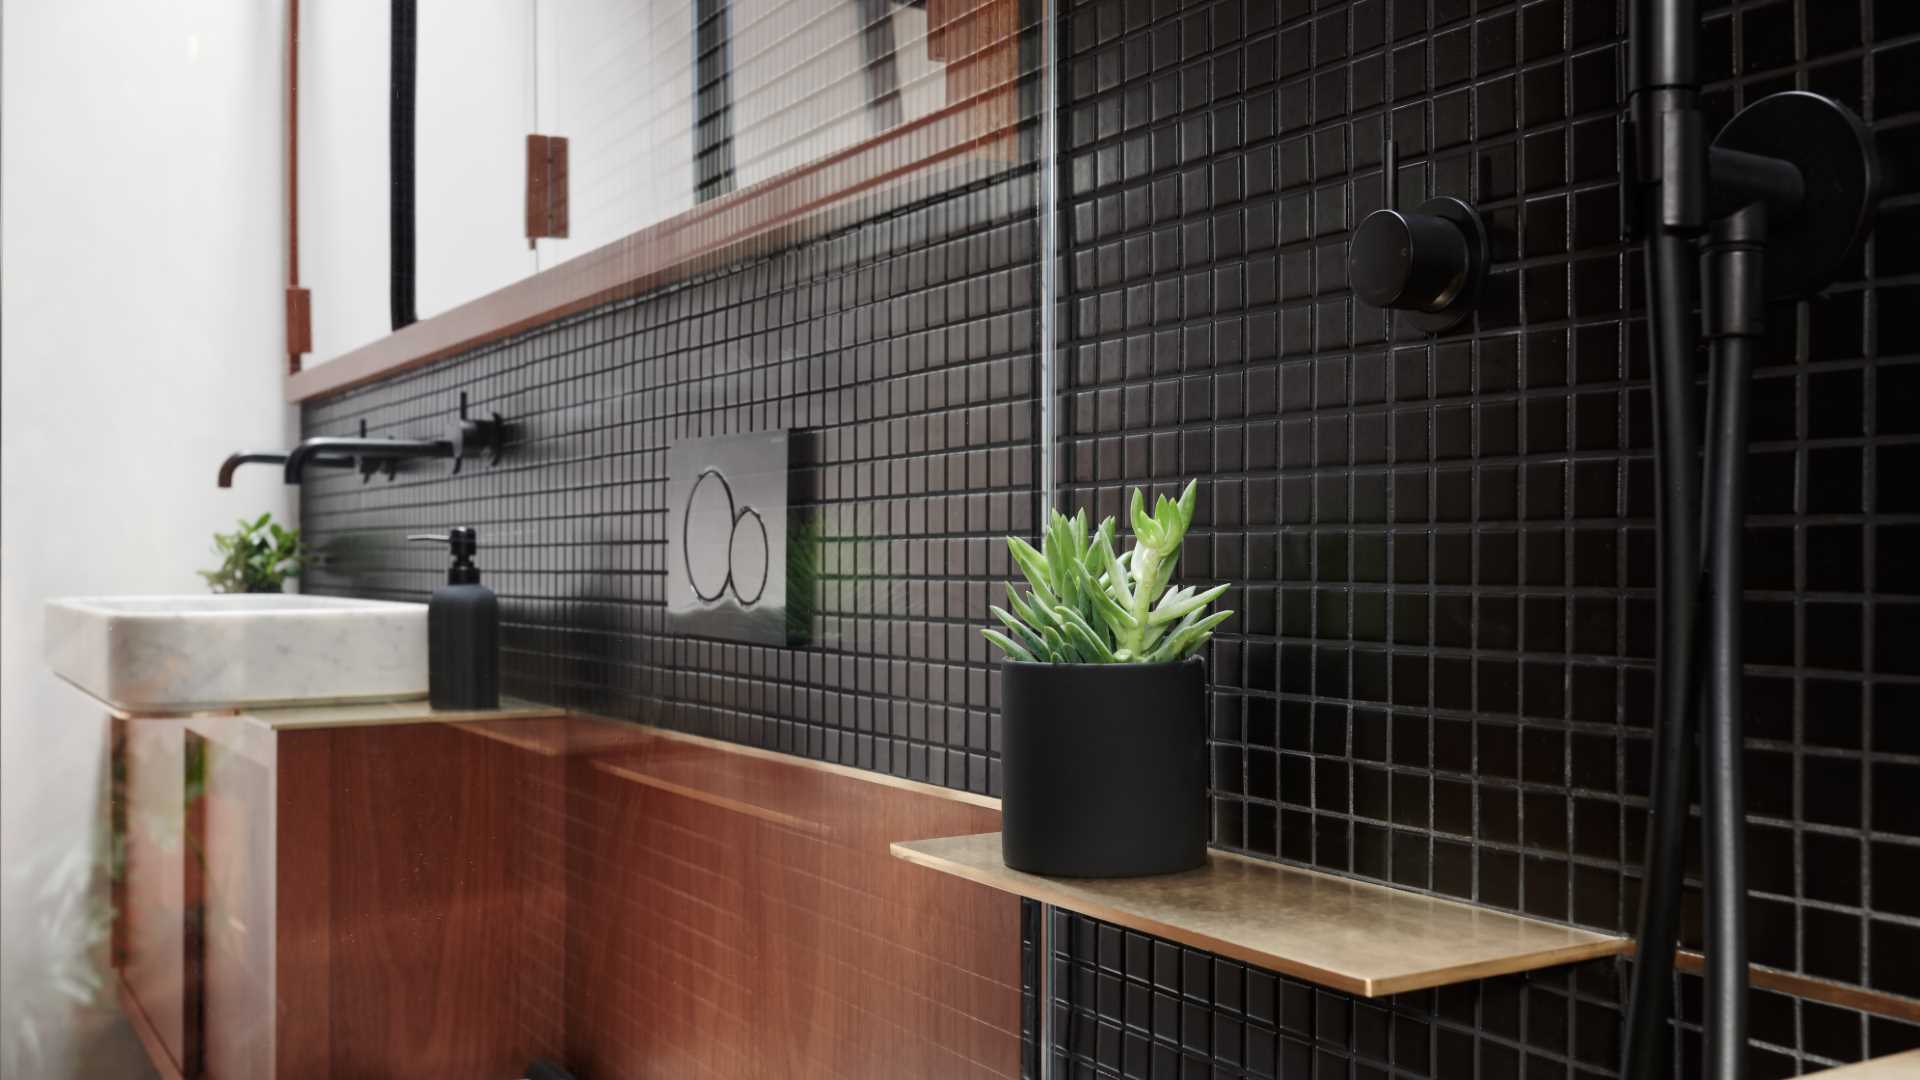 A modern bathroom with wood vanity and black tiles.